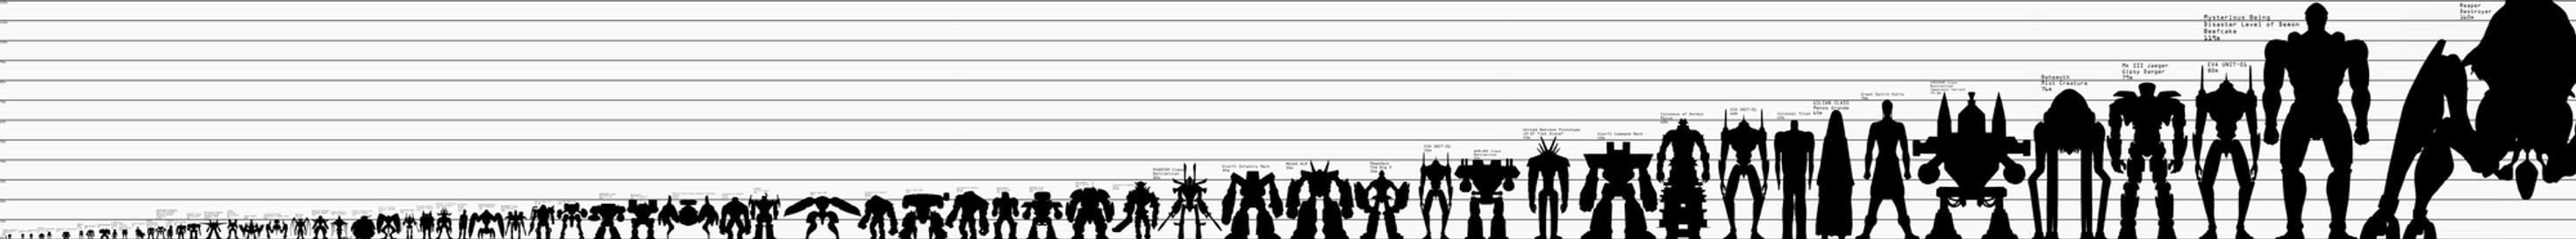 Monster Height Chart